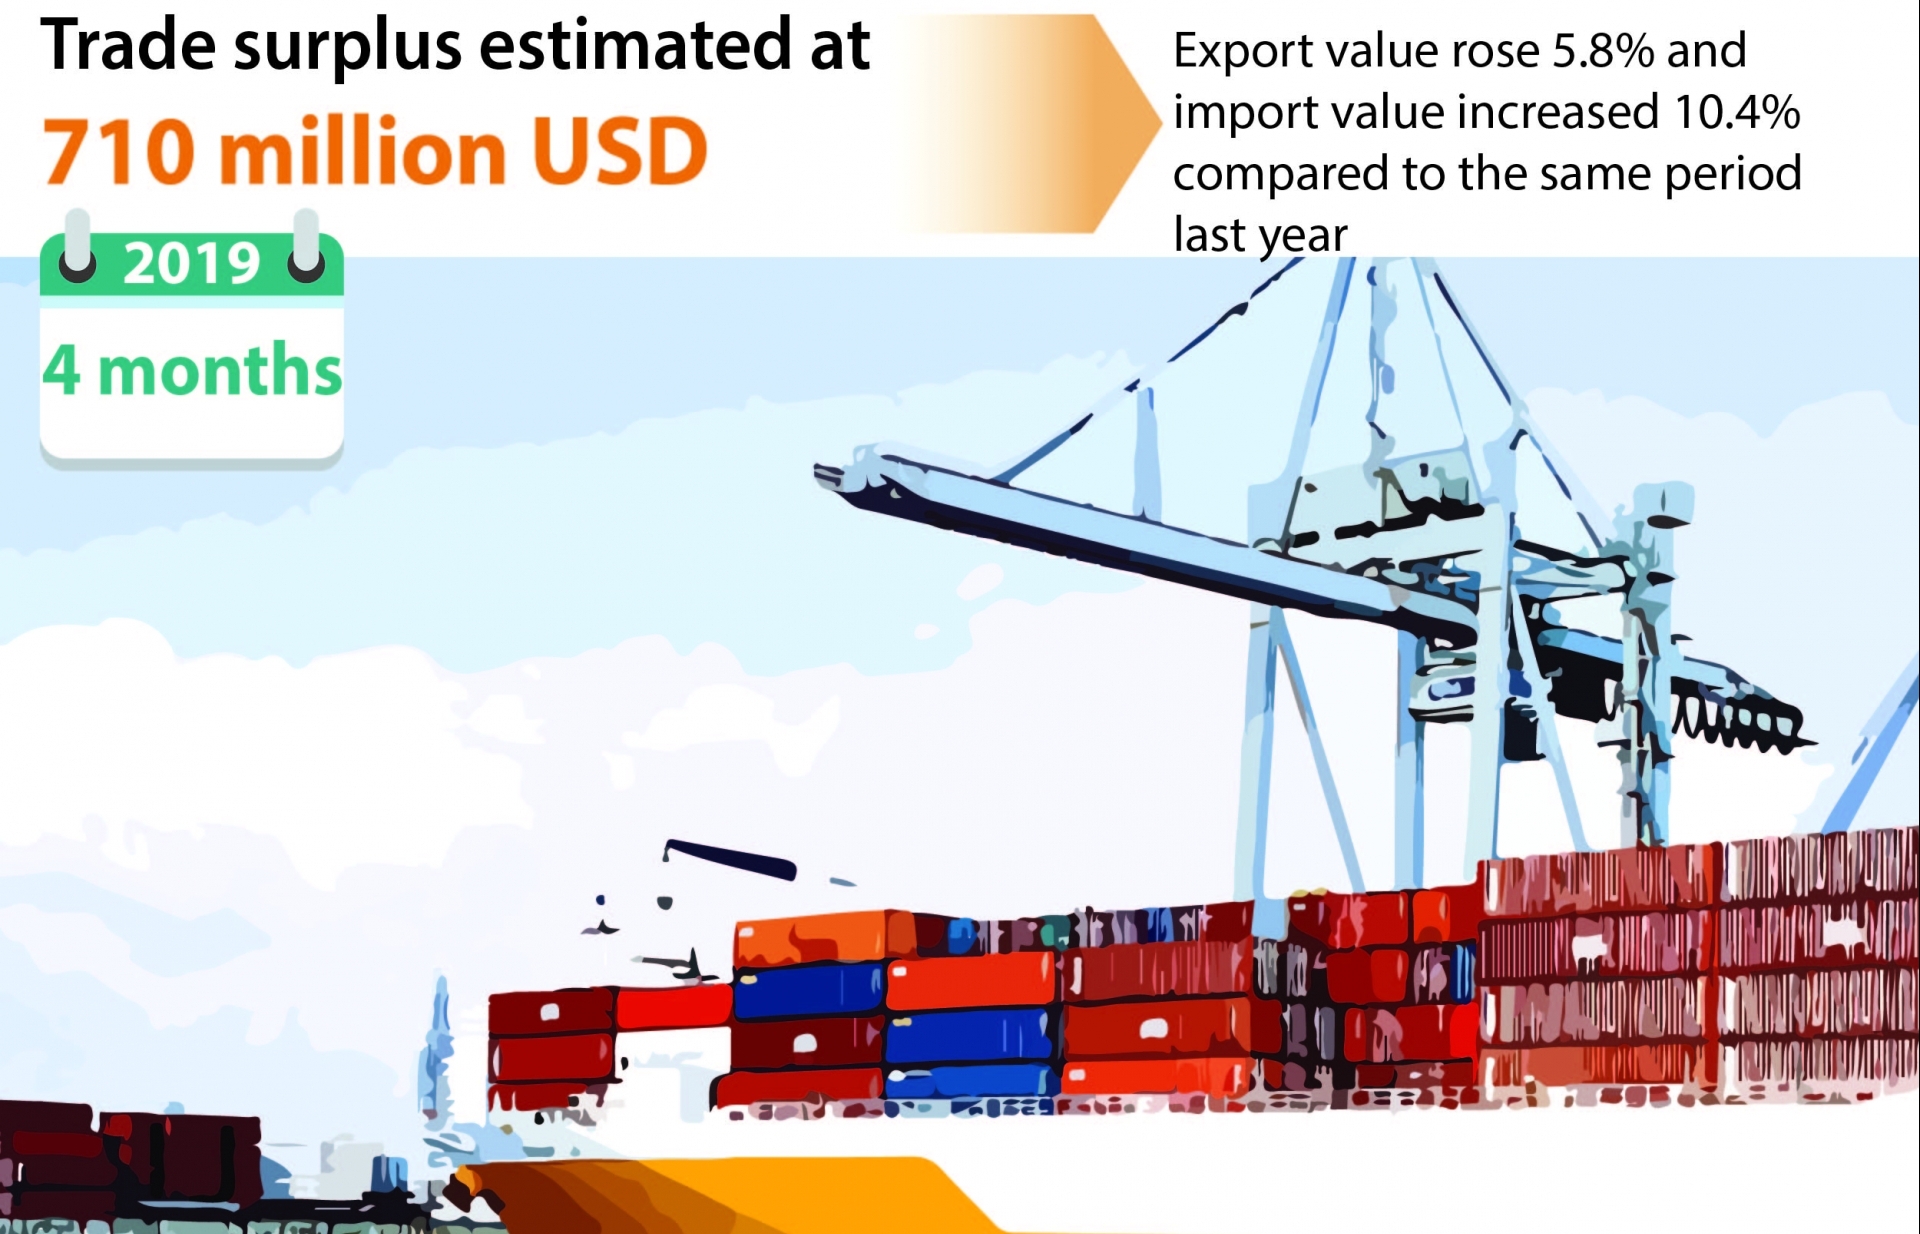 Trade surplus estimated at 710 million USD